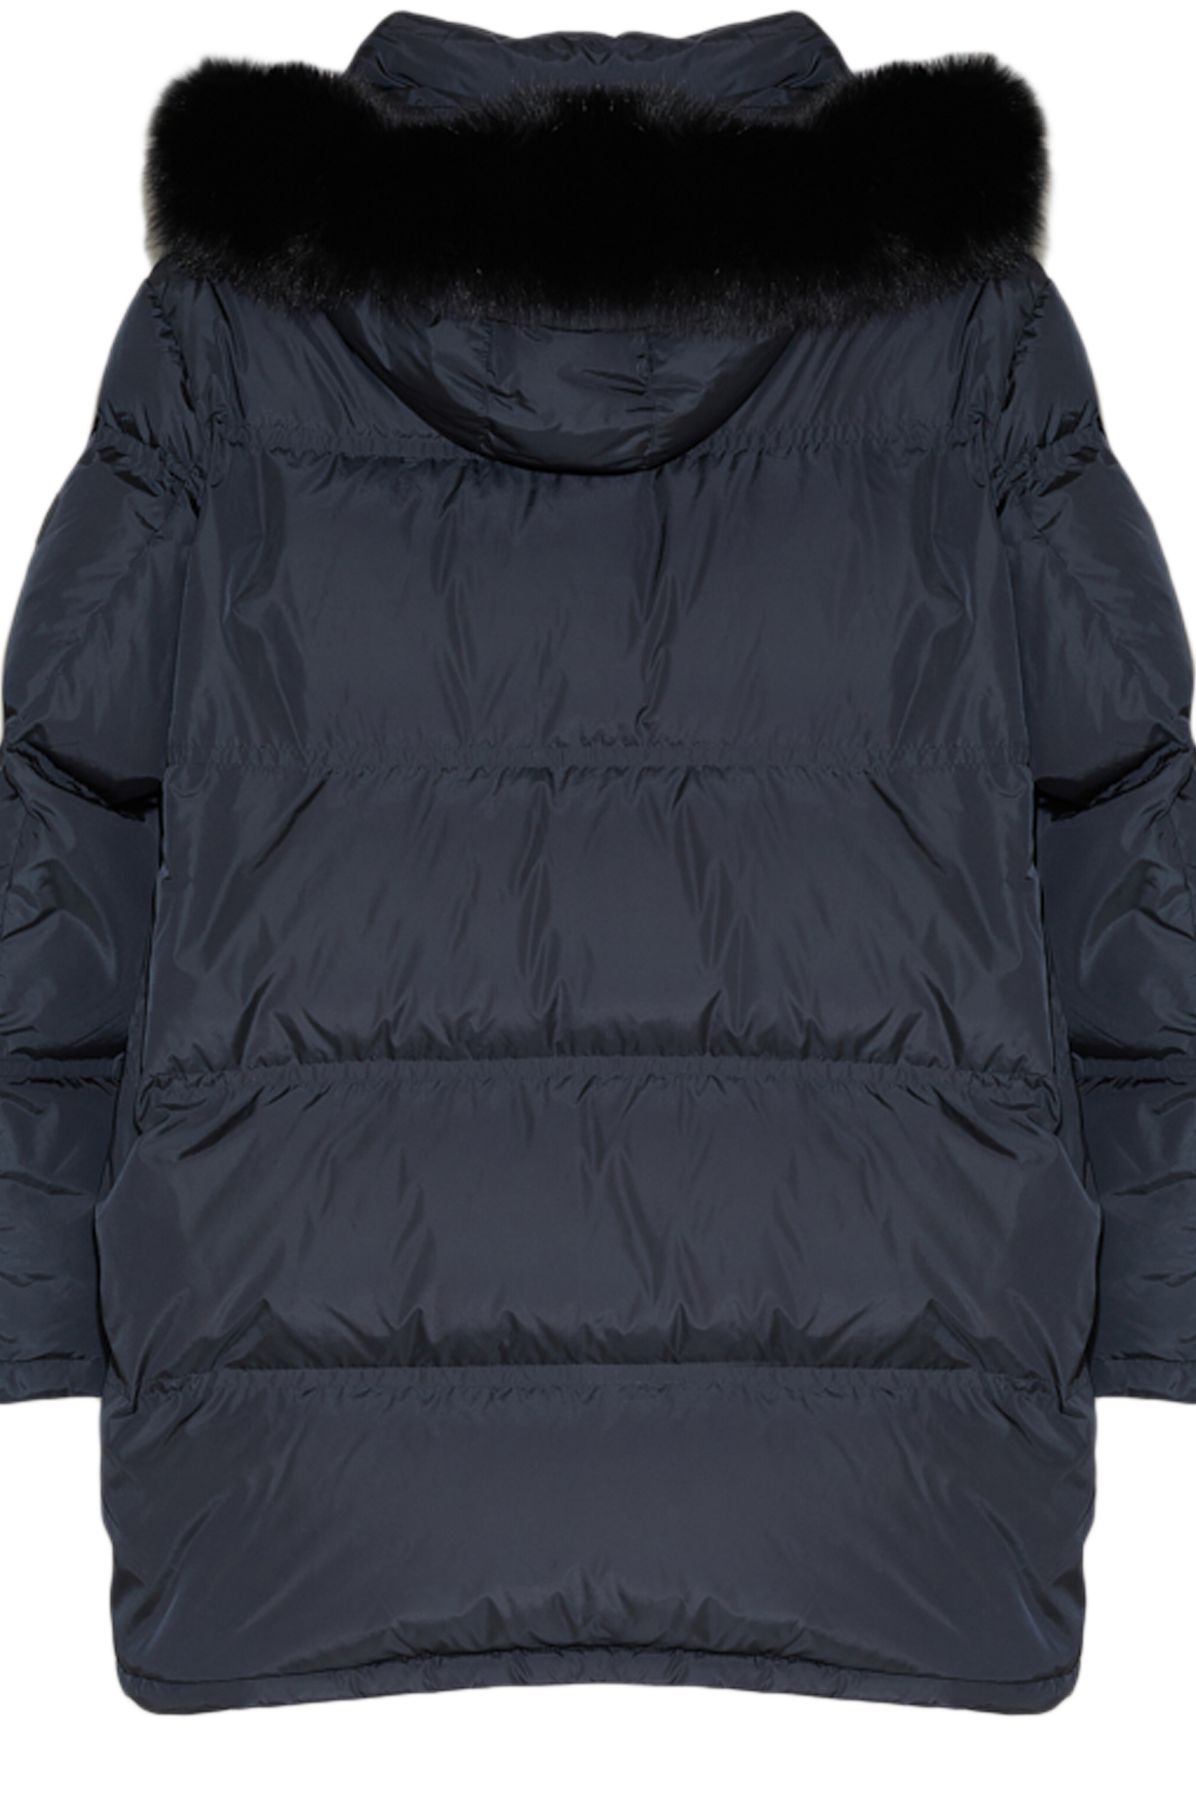 Yves Salomon Long hooded puffer jacket with fox fur trim